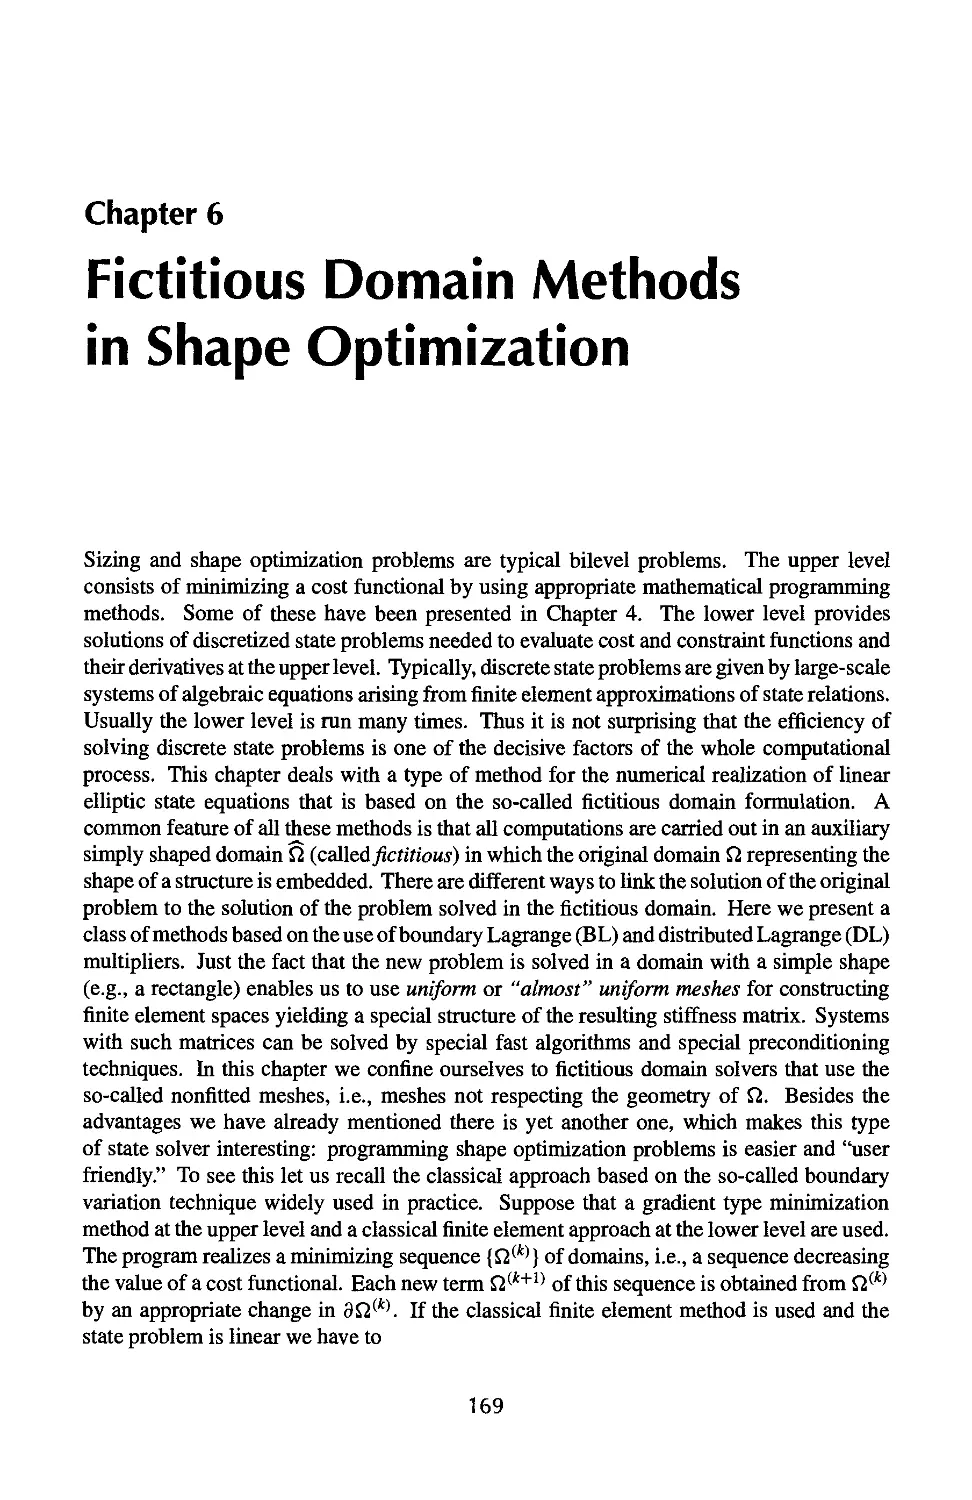 6 Fictitious Domain Methods in Shape Optimization